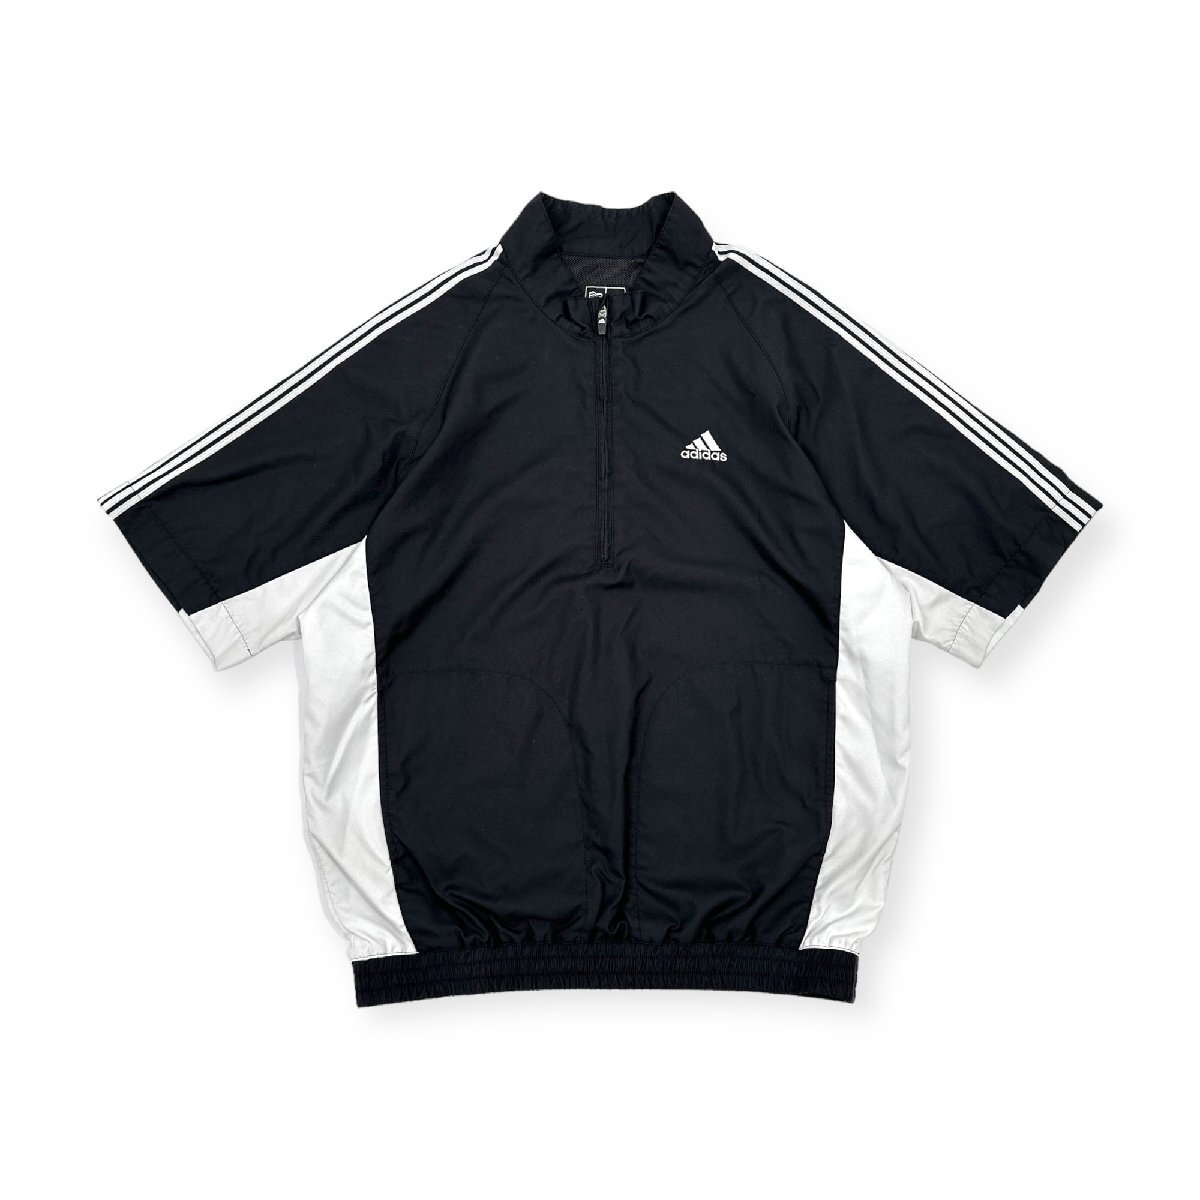 adidas golf Adidas Golf half Zip reverse side mesh short sleeves windbreaker jacket L/ black / black / men's / sport 